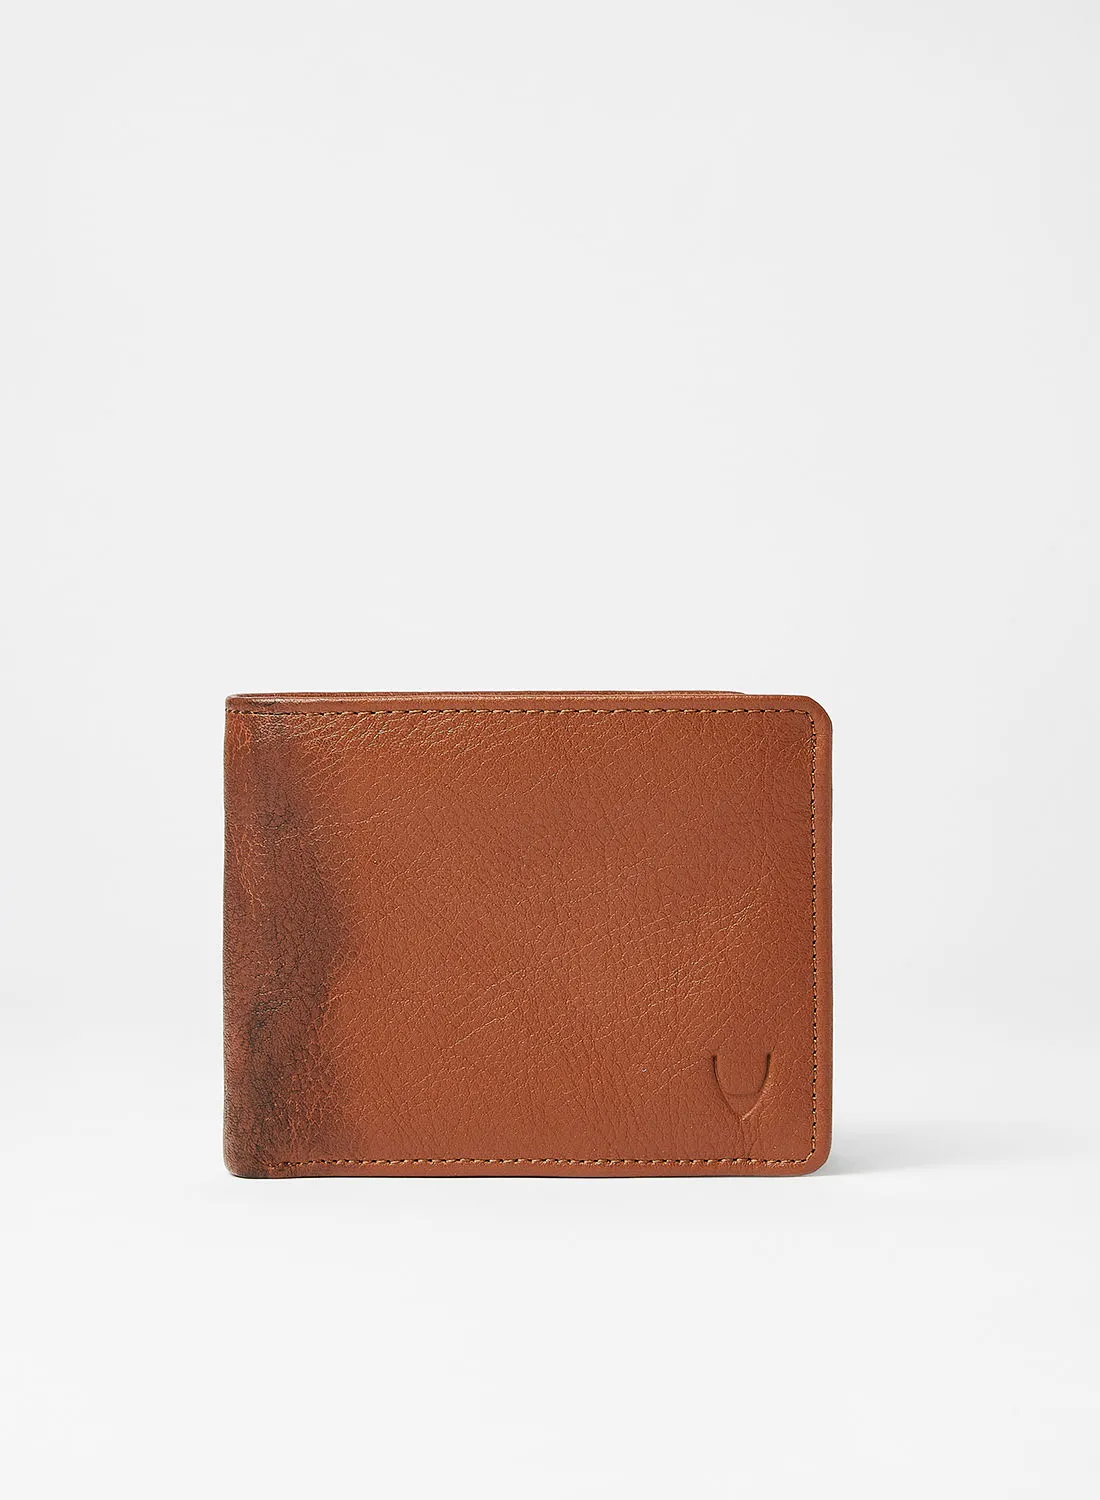 Hidesign Bi-Fold Leather Wallet Tan